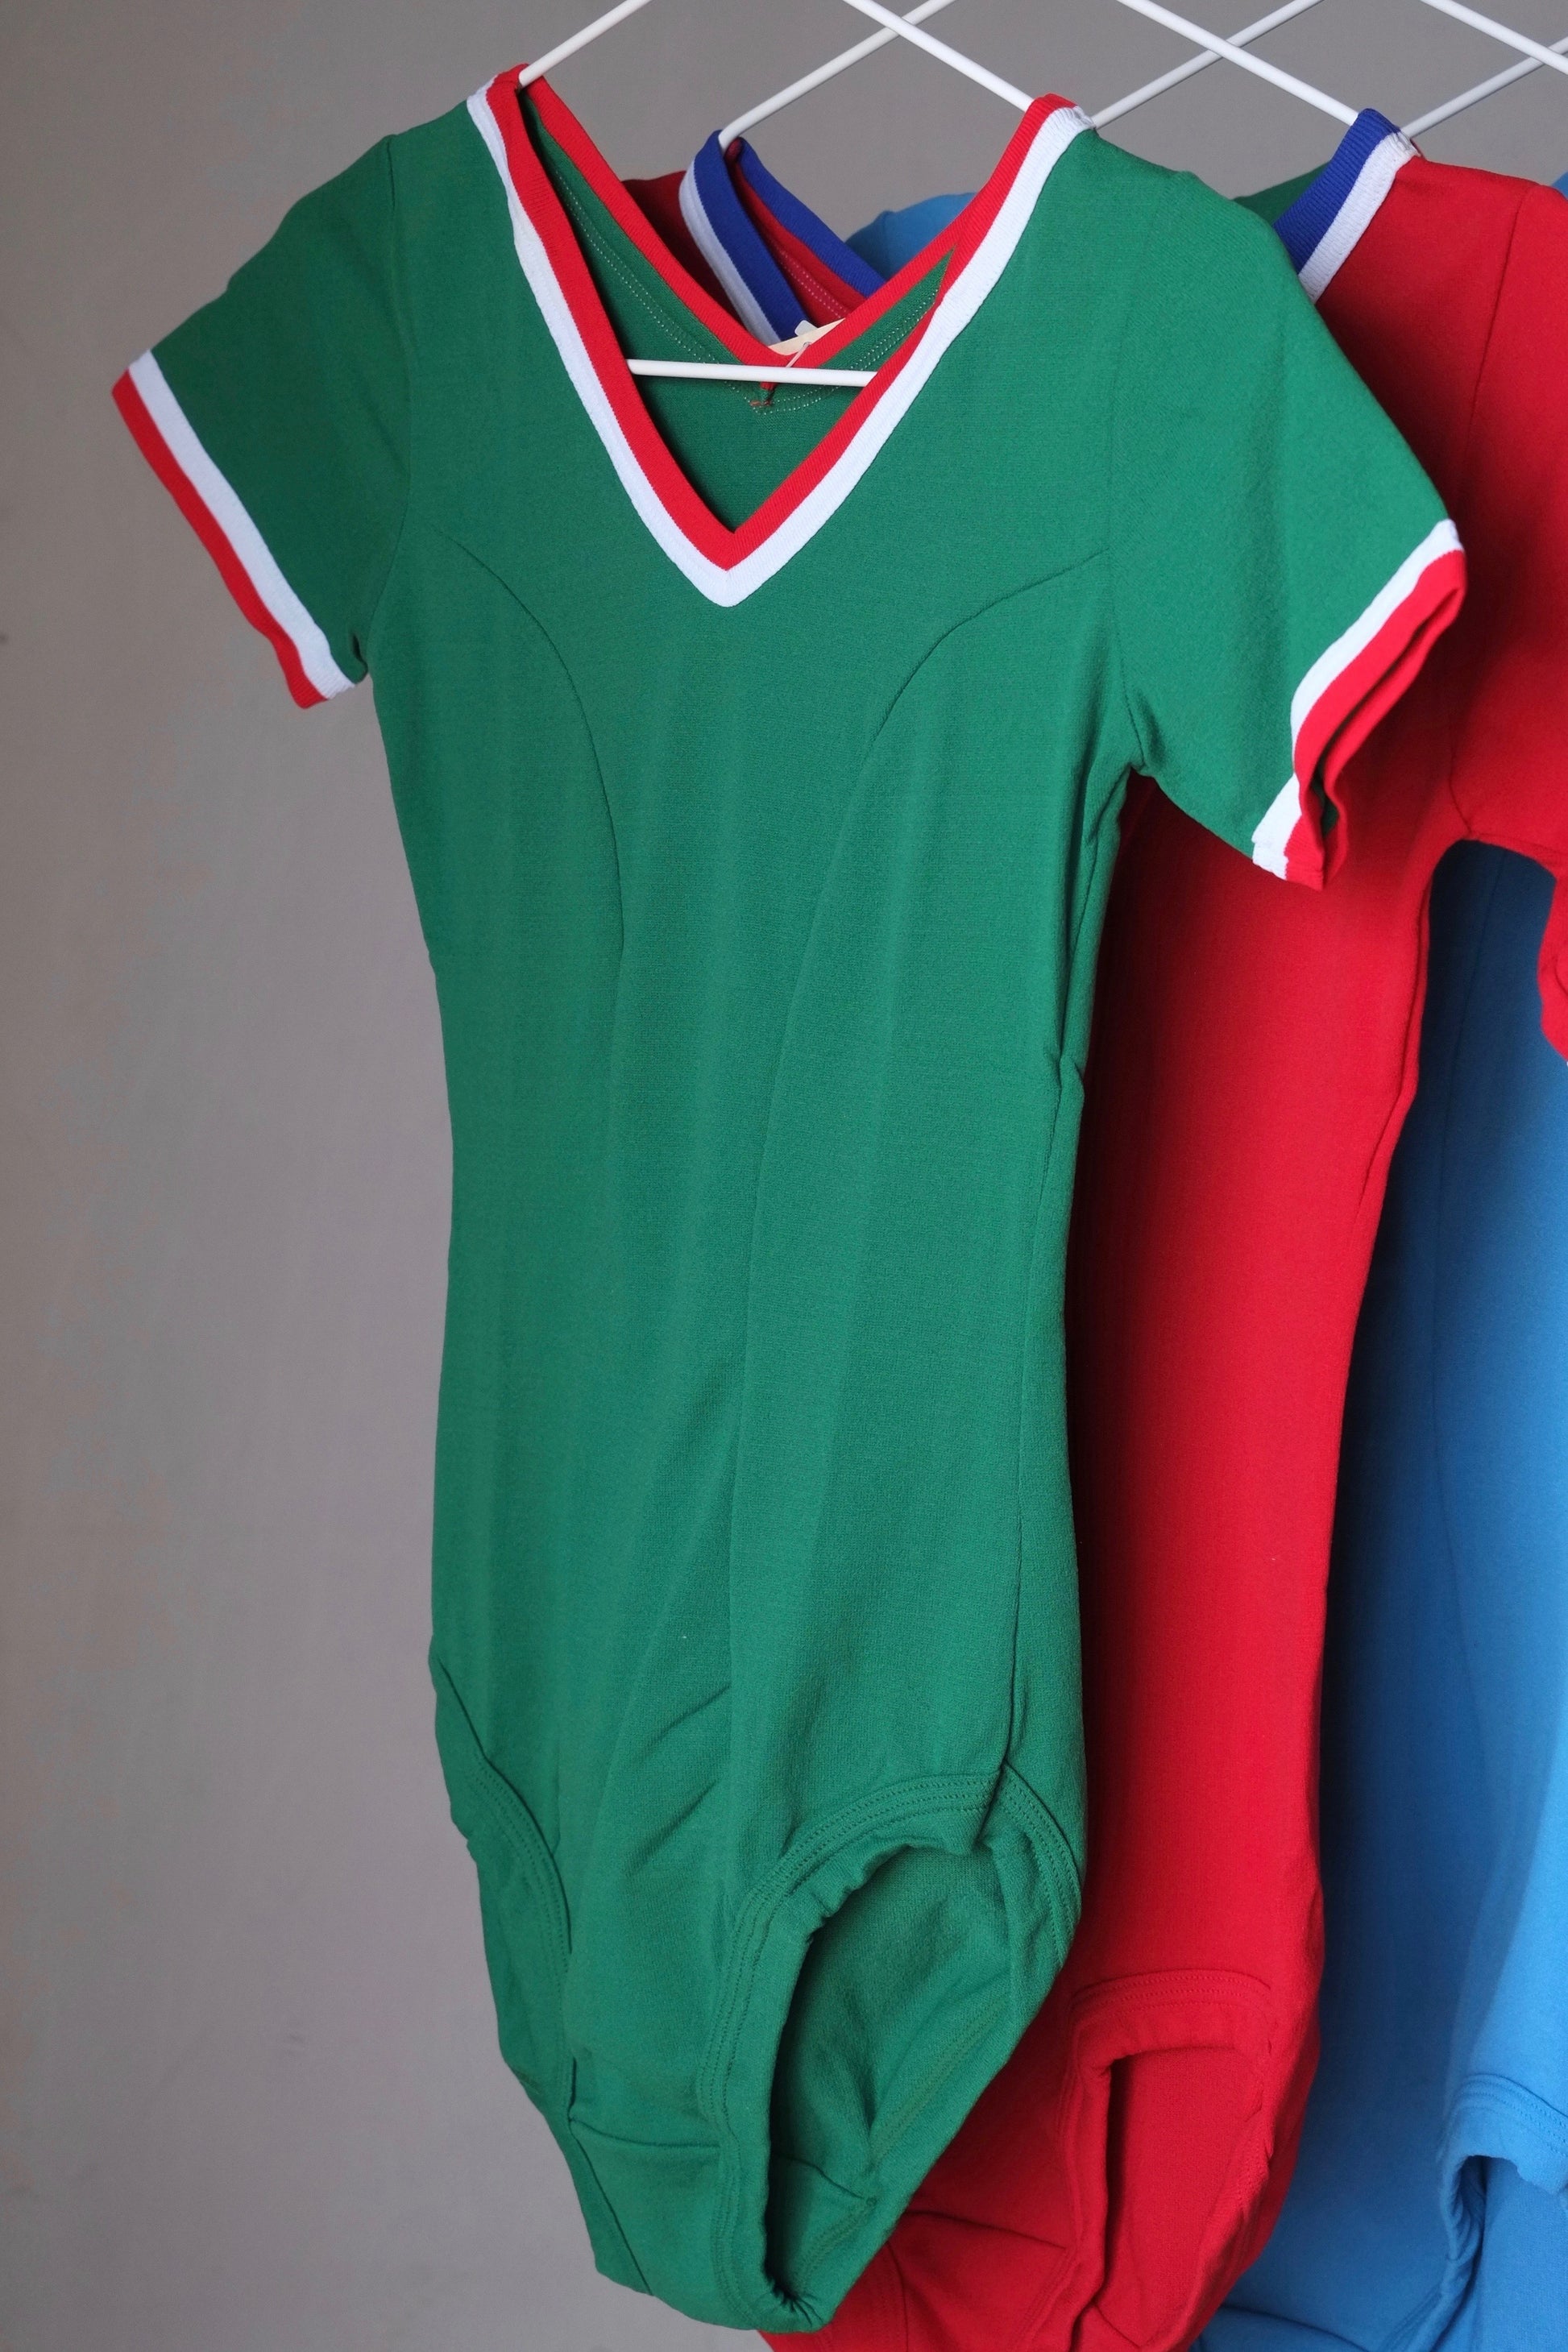 ZOFINA Olympic Short Sleeves 70's Leotard – Vintage Something